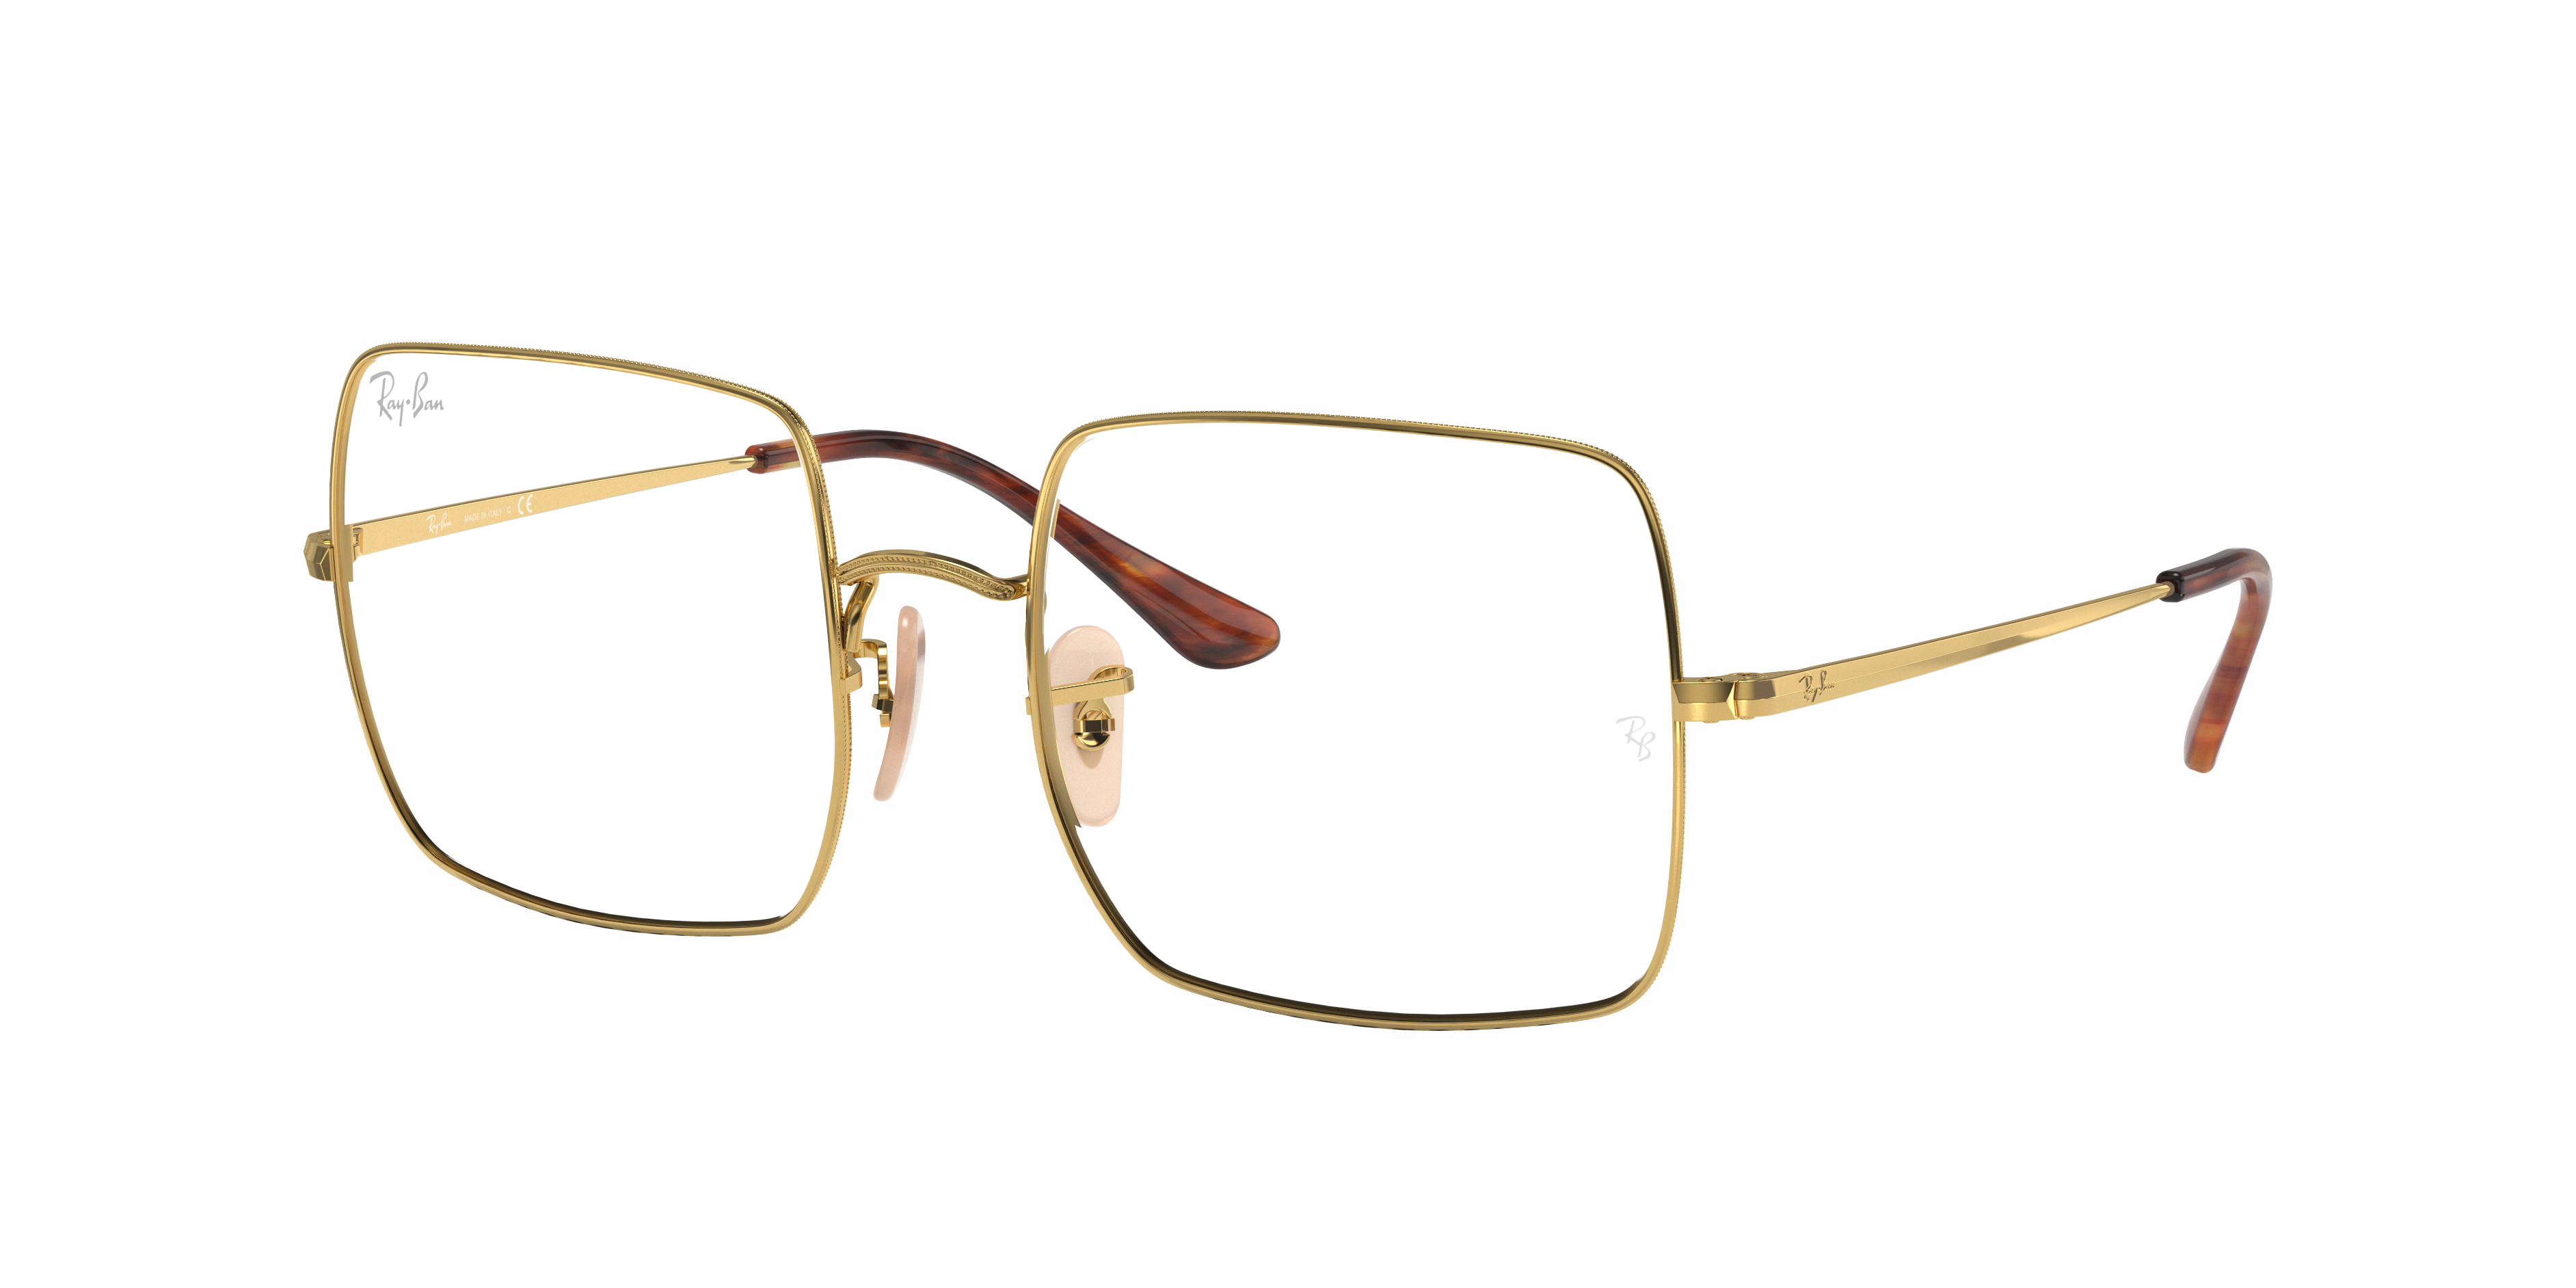 Square 1971 Optics Eyeglasses with Gold Frame | Ray-Ban®